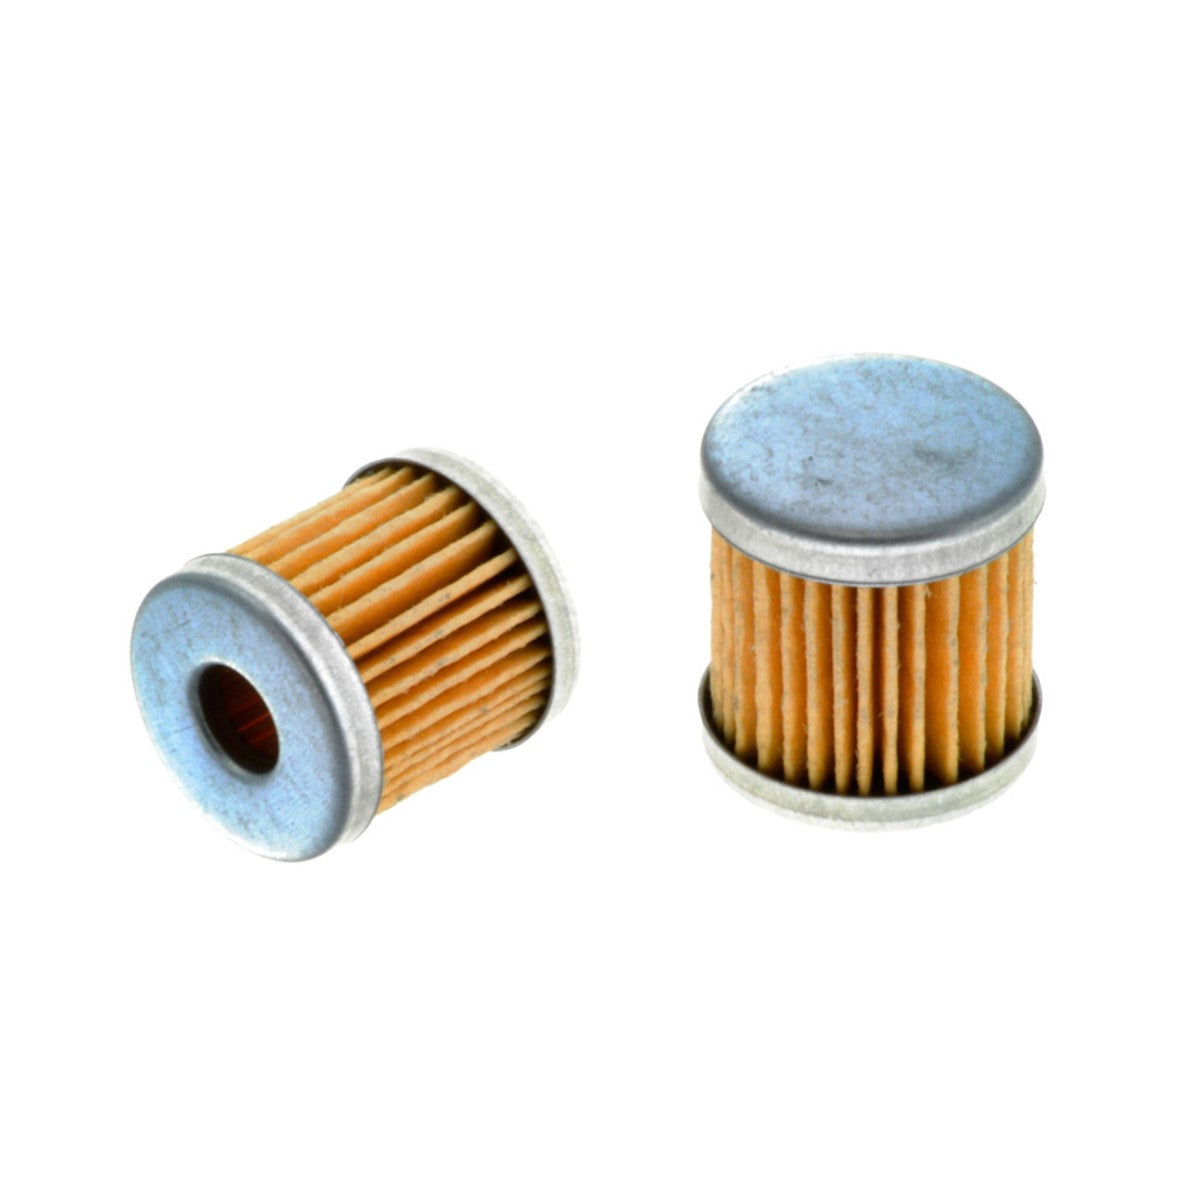 2 x filters LPG GAS OMB 6195 for solenoid shut off valve